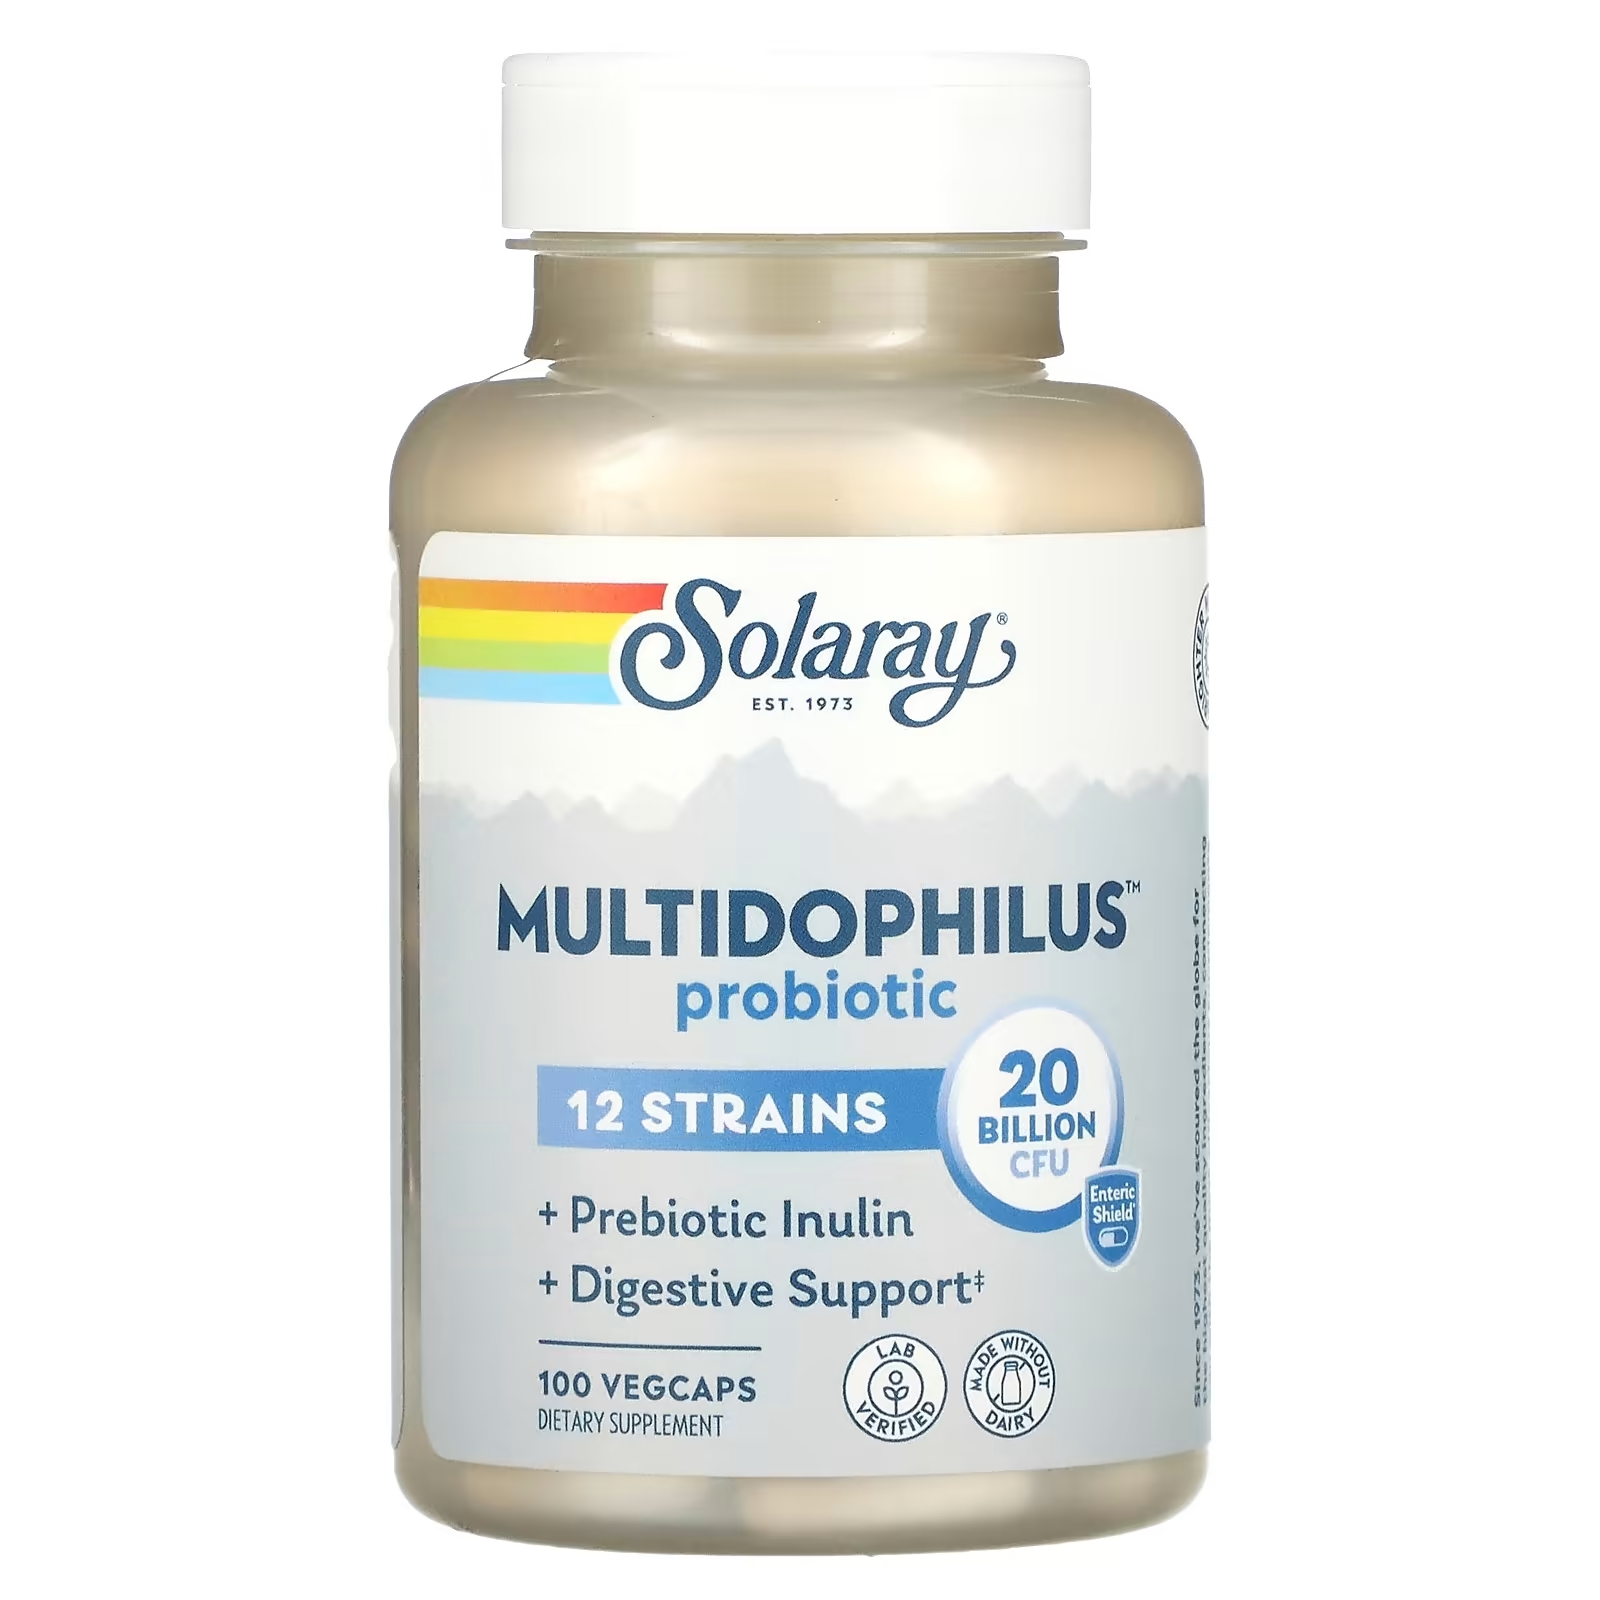 solaray multidophilus probiotic пробиотик 20 млрд кое 100 вегетарианских капсул vegcaps Solaray Multidophilus Probiotic пробиотик 20 млрд КОЕ, 100 вегетарианских капсул VegCaps